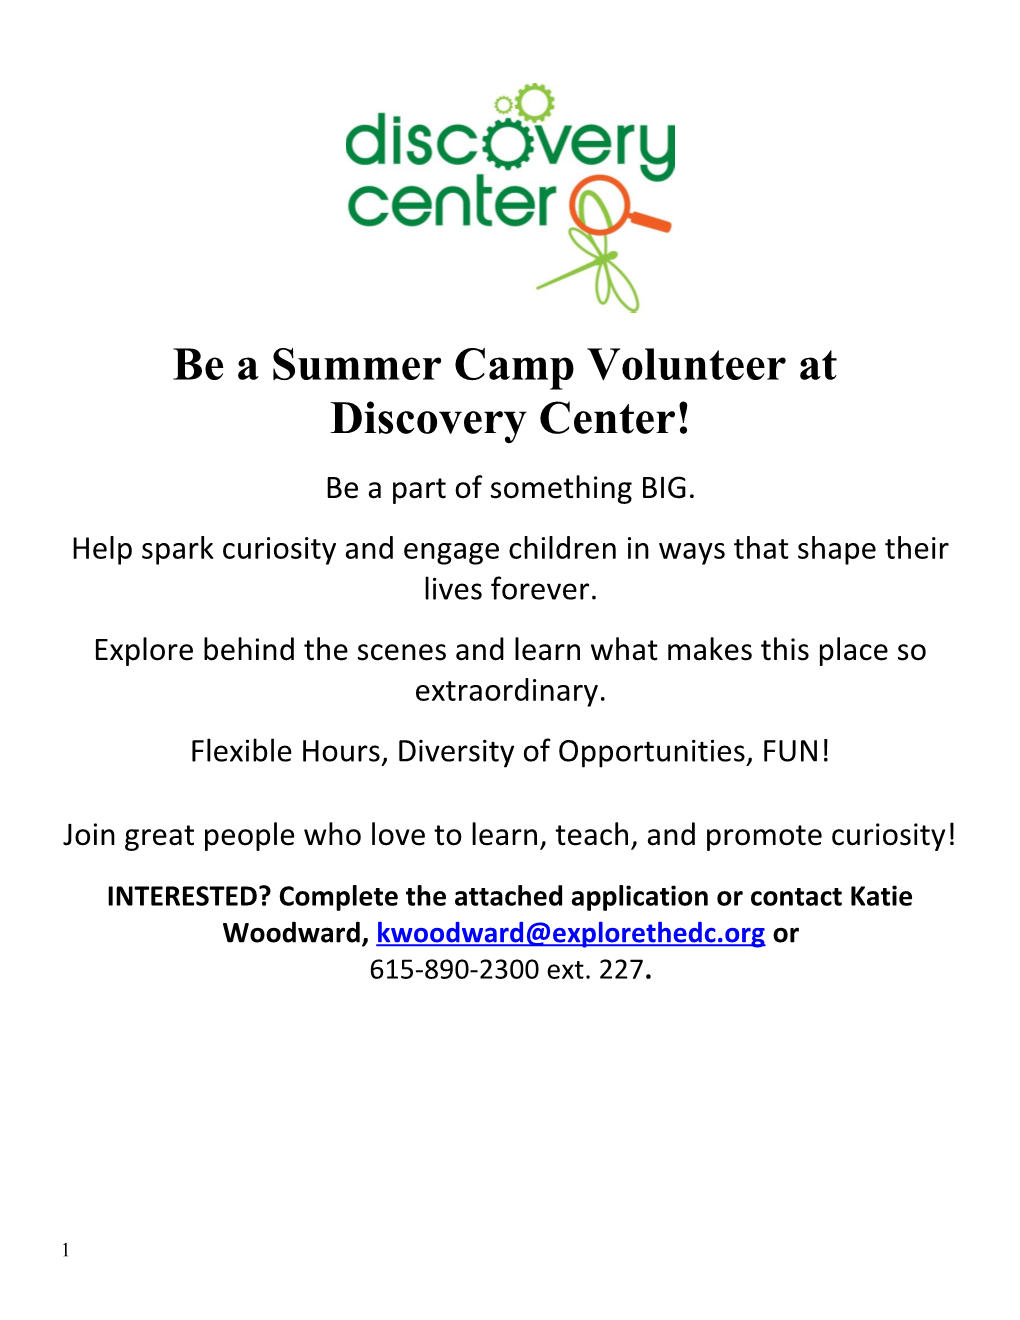 Be a Summer Camp Volunteer At